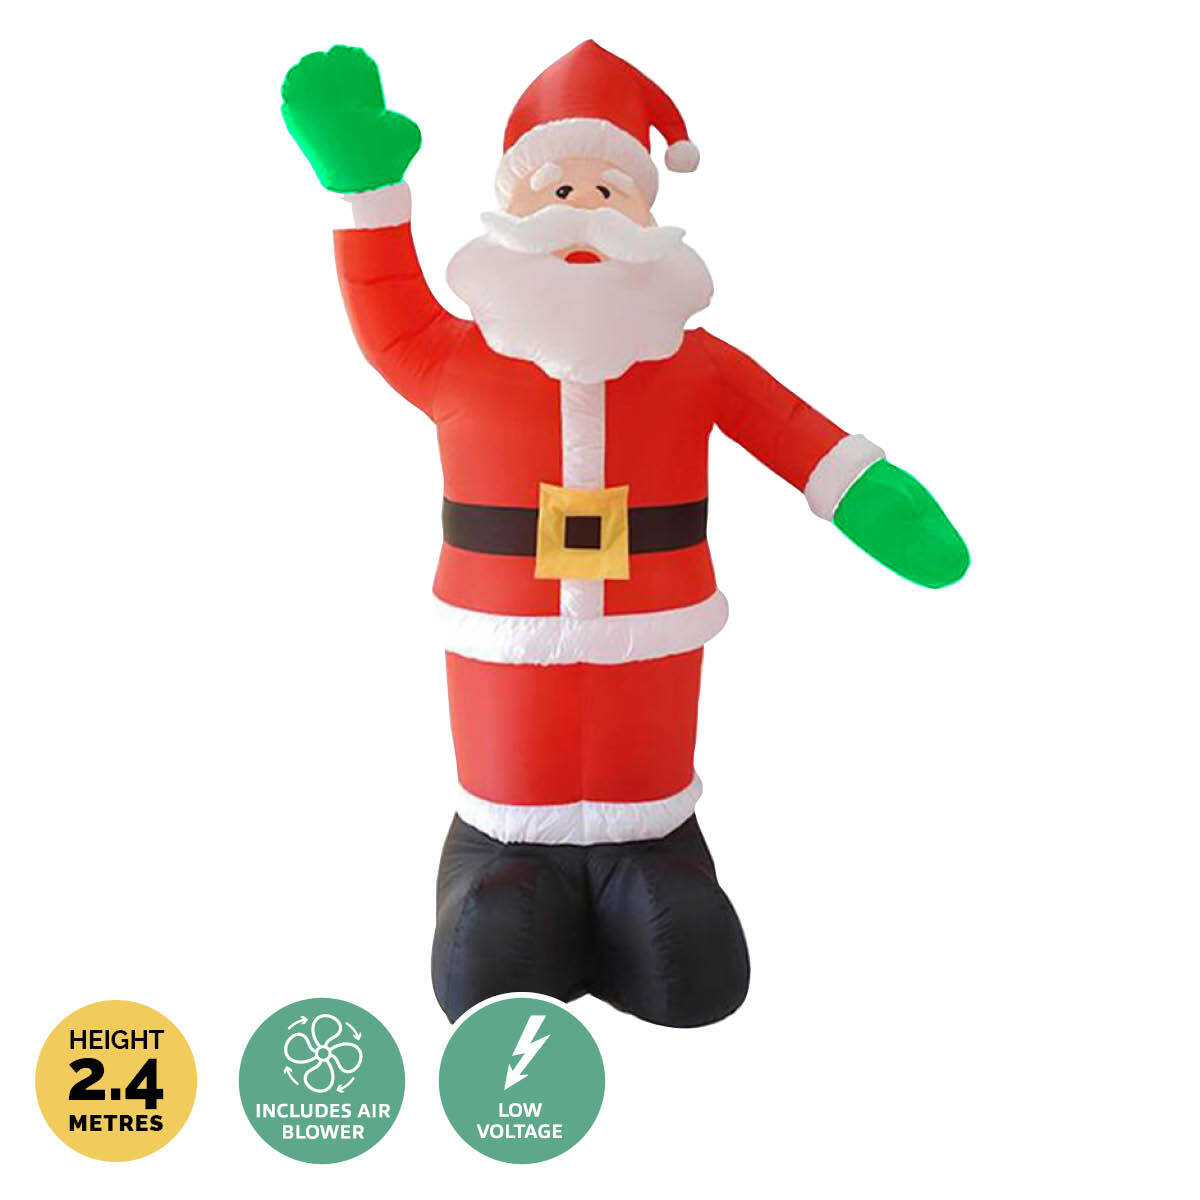 Christmas By Sas 2.4m Waving Santa Self Inflatable Bright LED Lighting